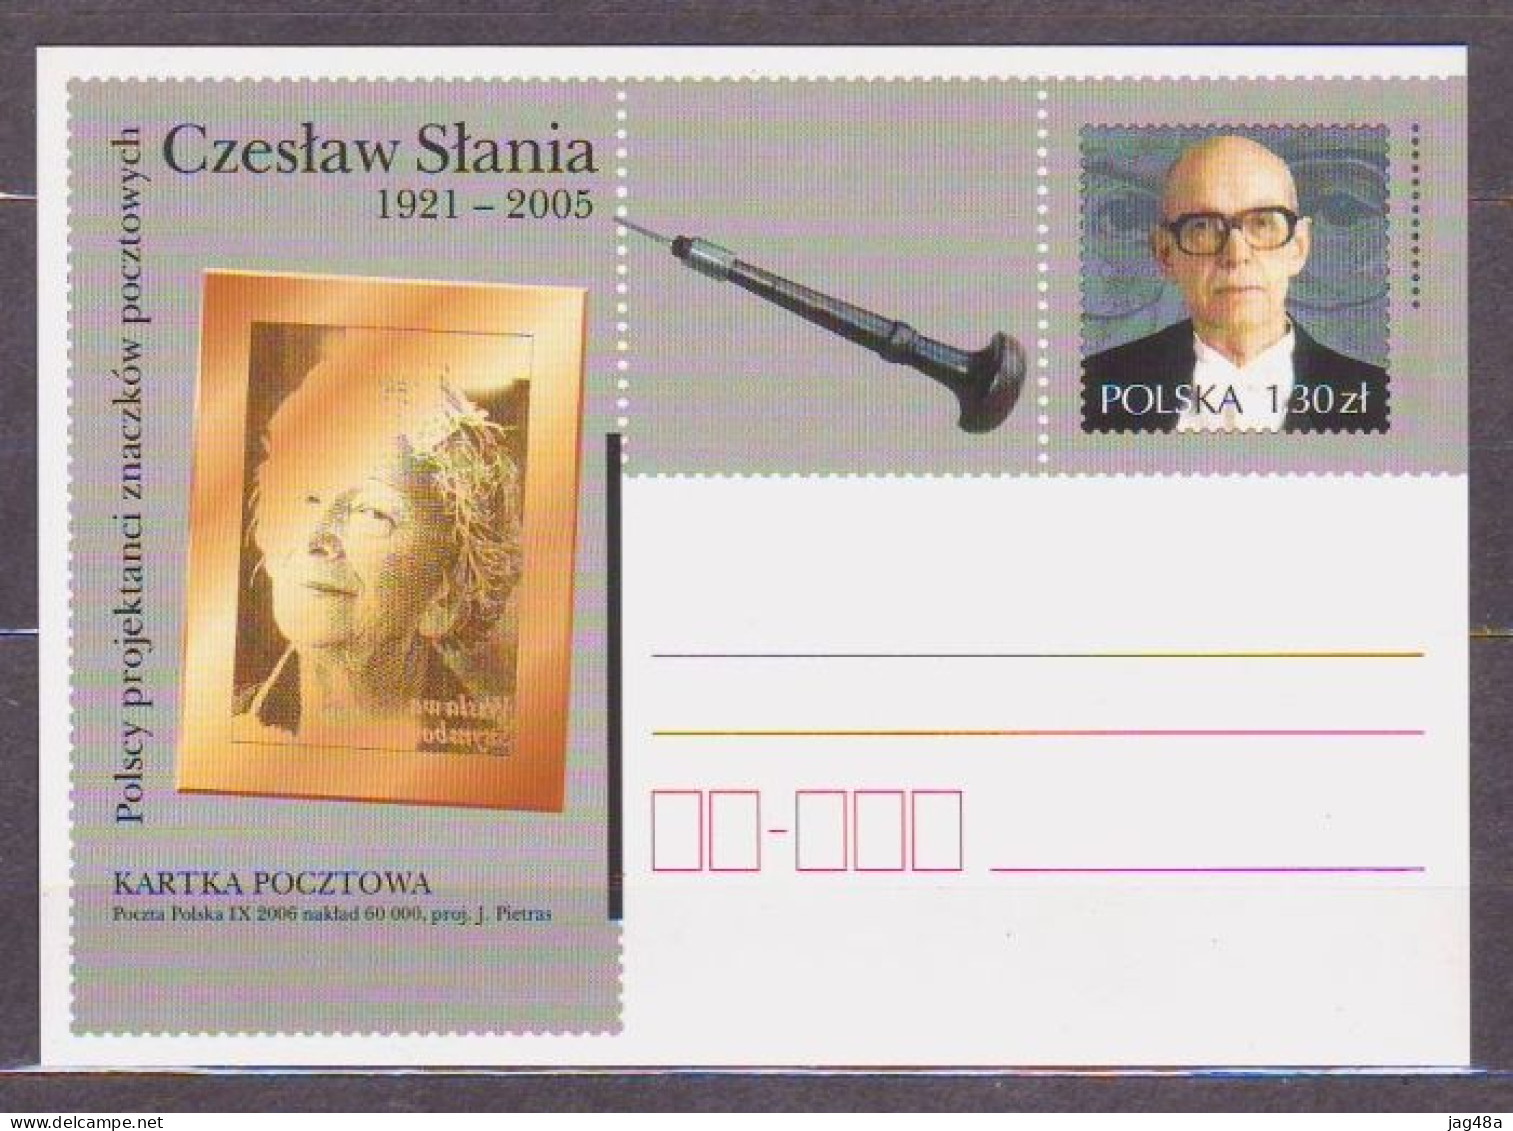 POLAND..2006/CZESLAW SLANIA, Polish Postage Stamp And Banknote Engraver.. PostCard/unused. - Lettres & Documents